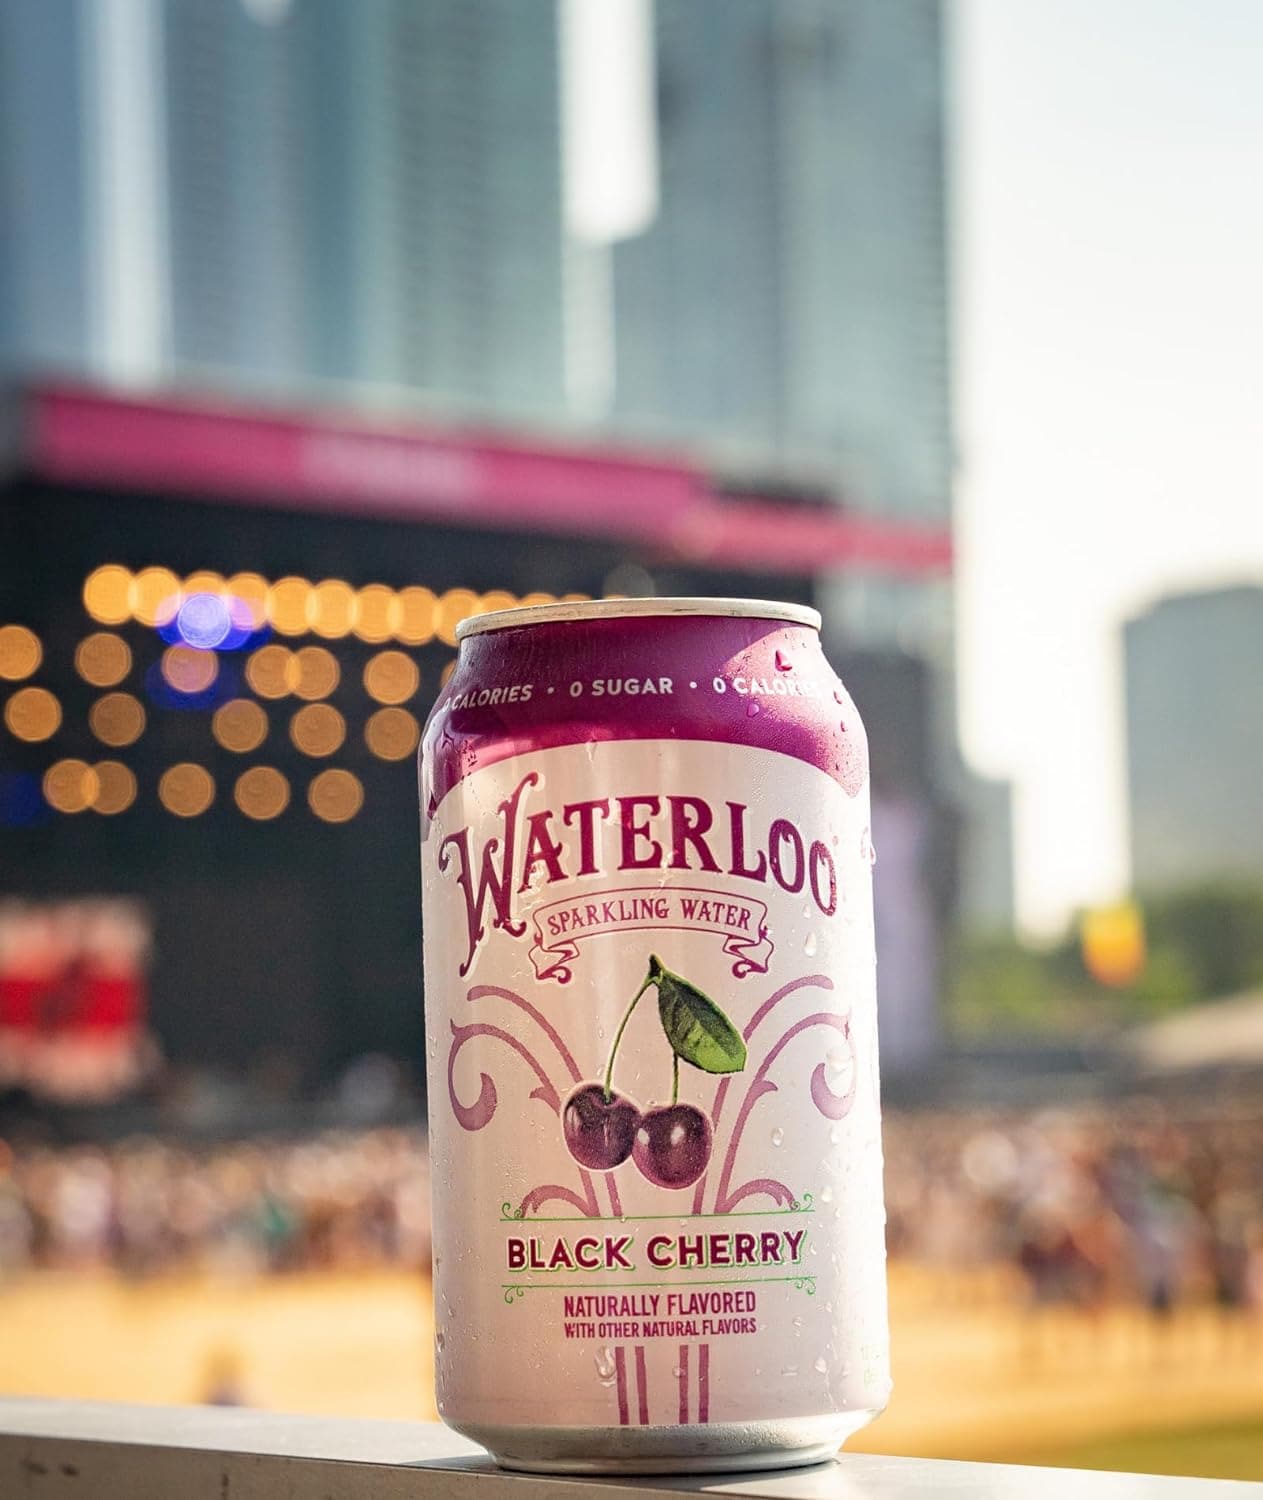 Waterloo Black Cherry Sparkling water -Organic - 12 Pack x 355ml - 0 Sugar, 0 Calories, Non-GMO, Gluten Free, BPA Free, Vegan,Whole30, Kosher, No Artificial Sweetener, Soda & Tonic Replacement - Athletix.ae